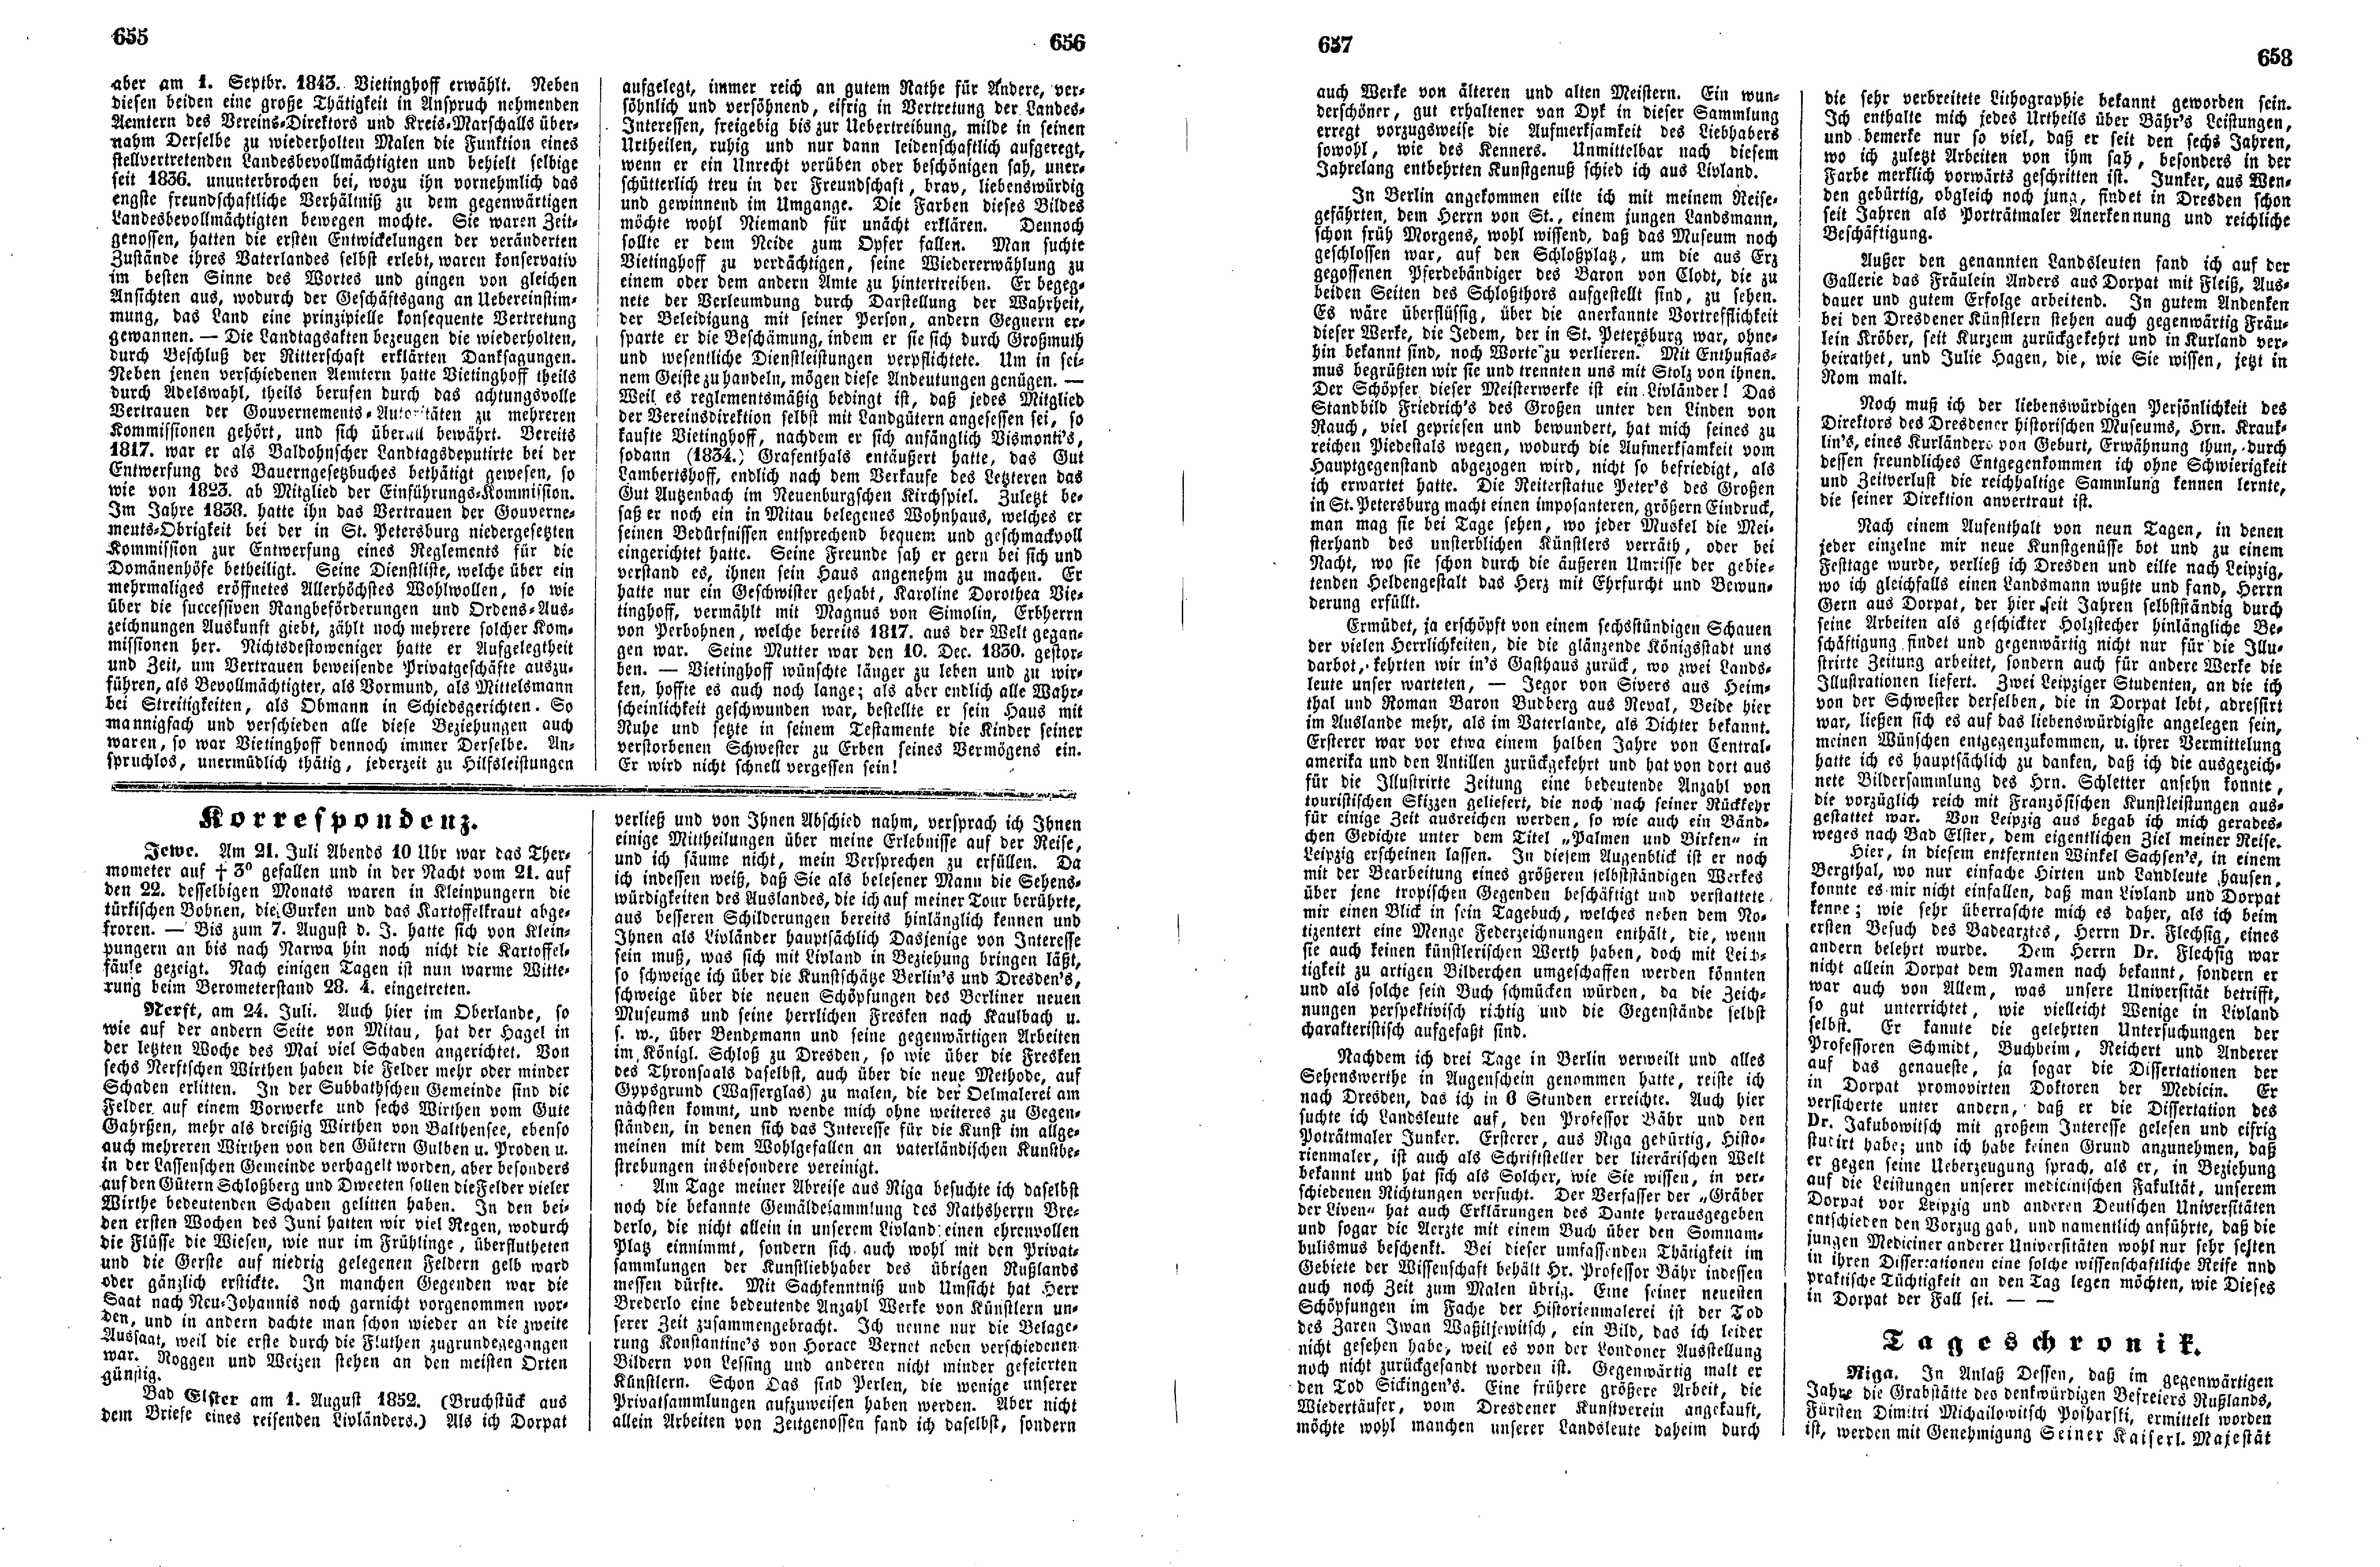 Das Inland [17] (1852) | 169. (655-658) Main body of text